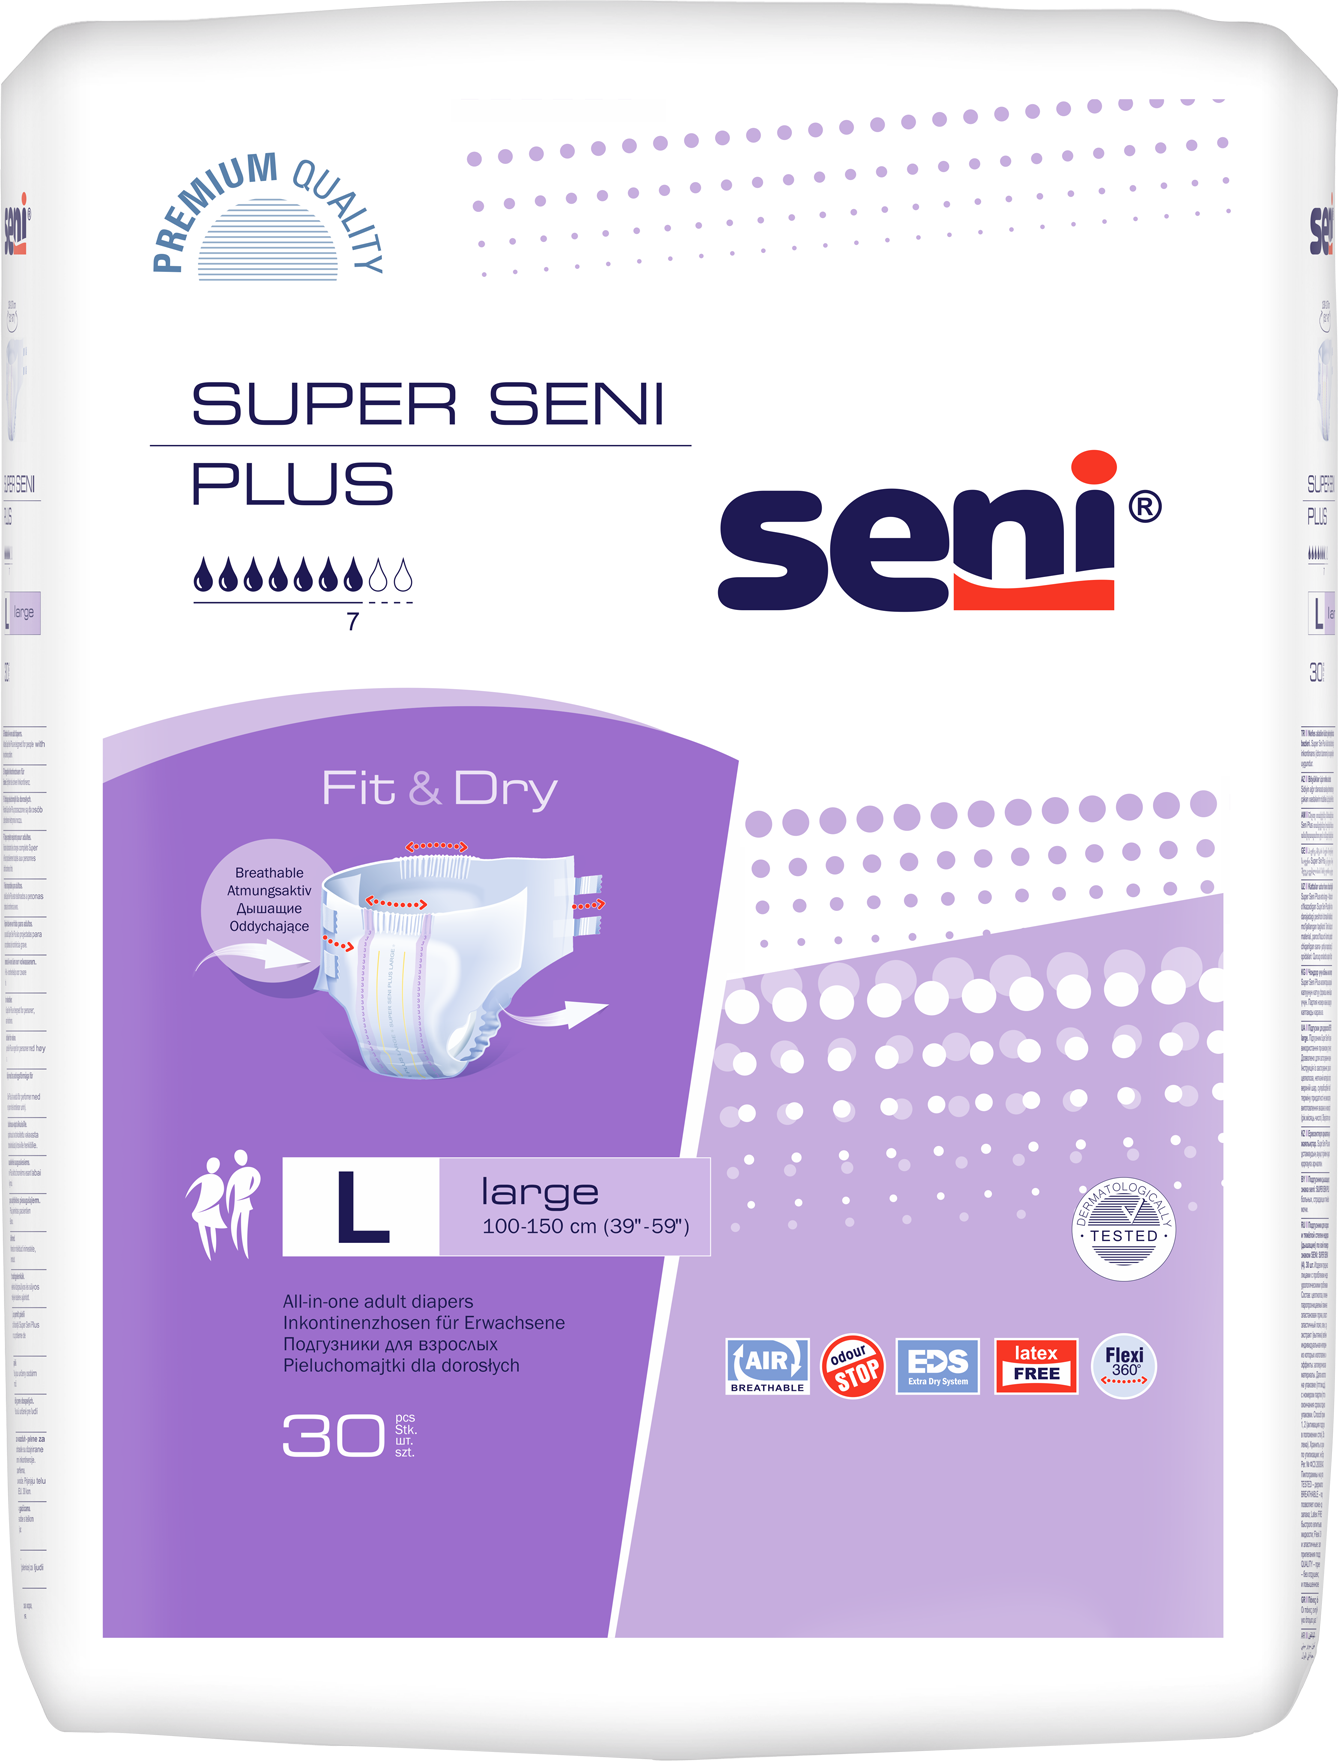 Super Seni Plus / Супер Сени Плюс - подгузники для взрослых, L, 30 шт.